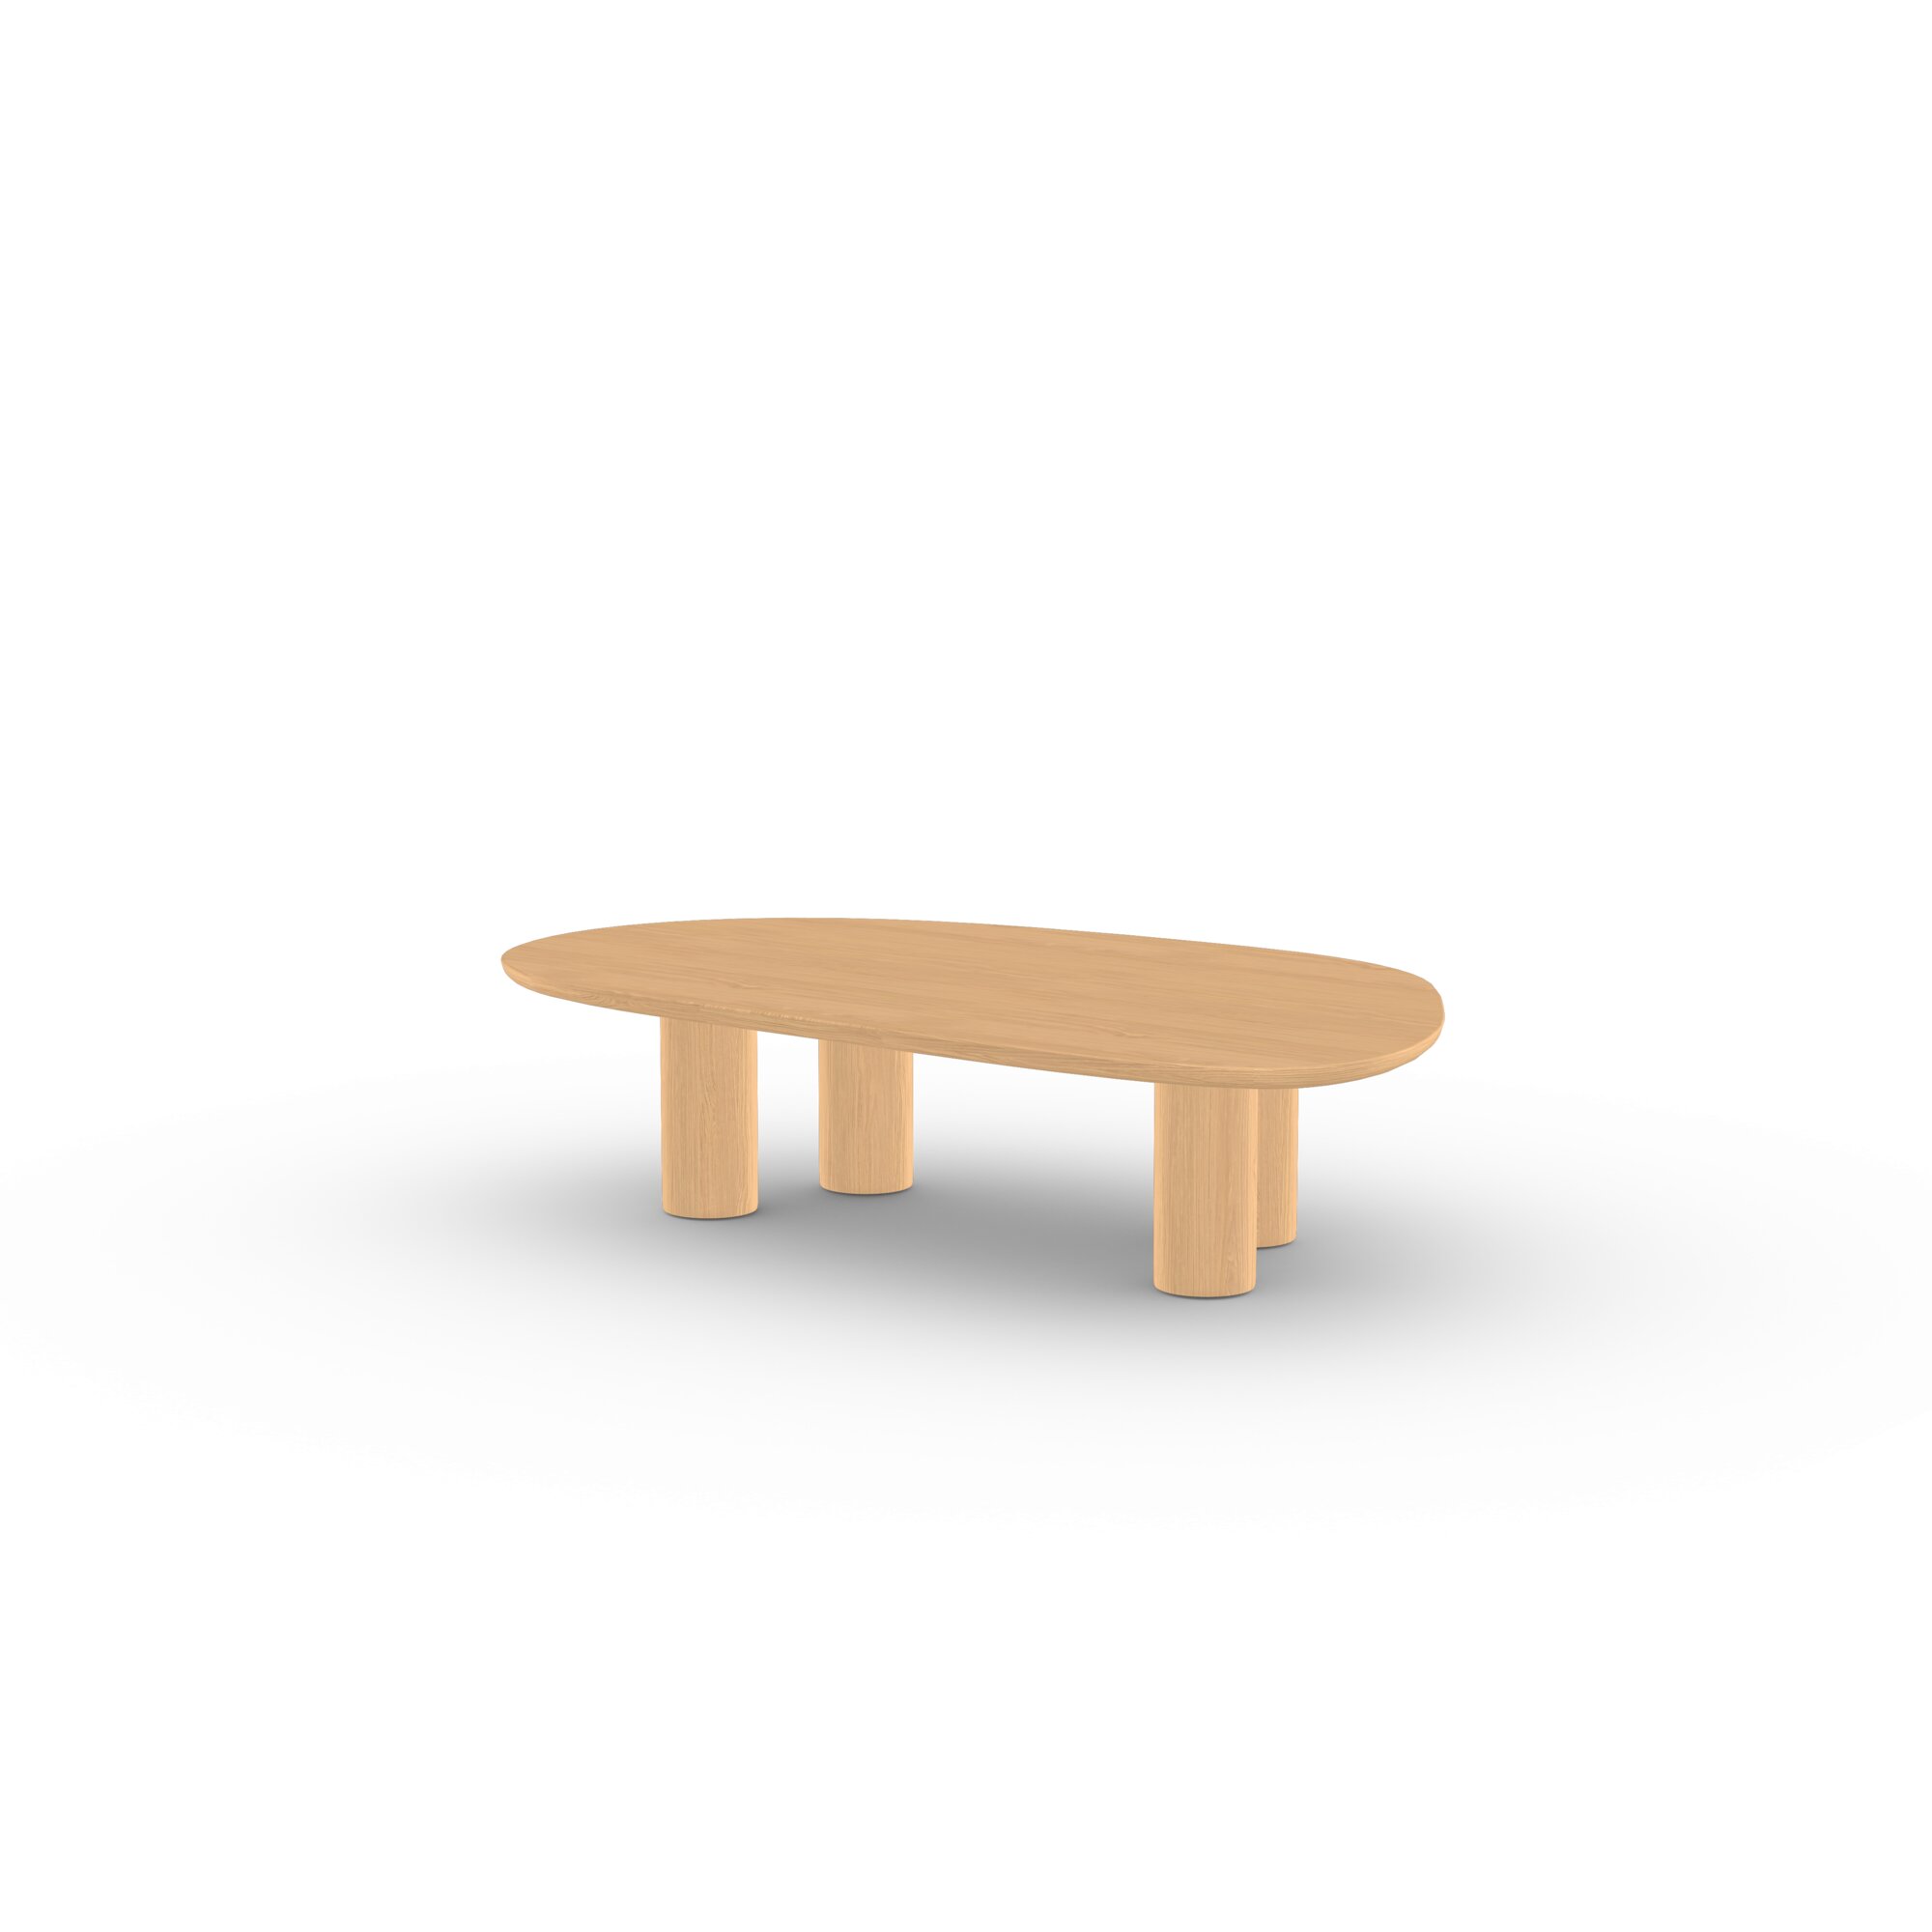 Design Coffee Table | Blob Coffee Table Oak hardwax oil natural 3062 | Oak hardwax oil natural 3062 | Studio HENK| 